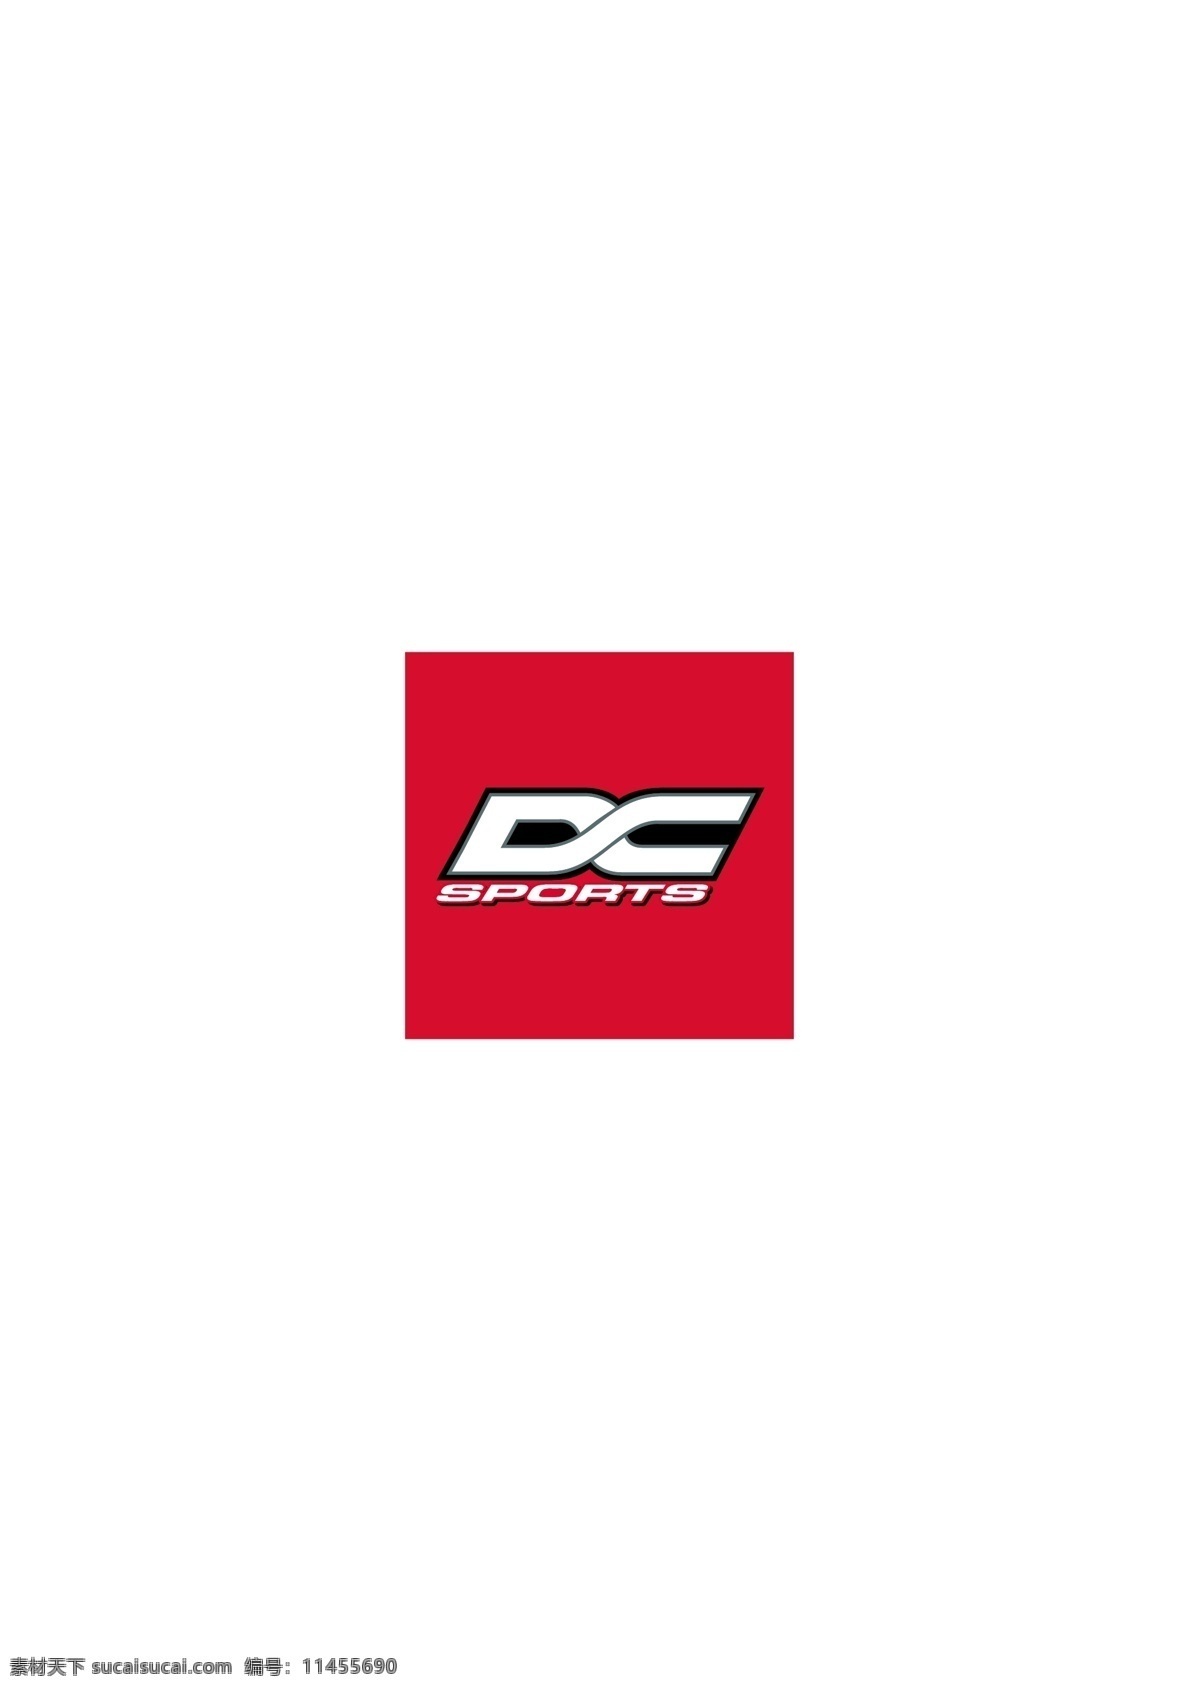 logo大全 logo 设计欣赏 商业矢量 矢量下载 dcsports1 运动 赛事 标志设计 欣赏 网页矢量 矢量图 其他矢量图